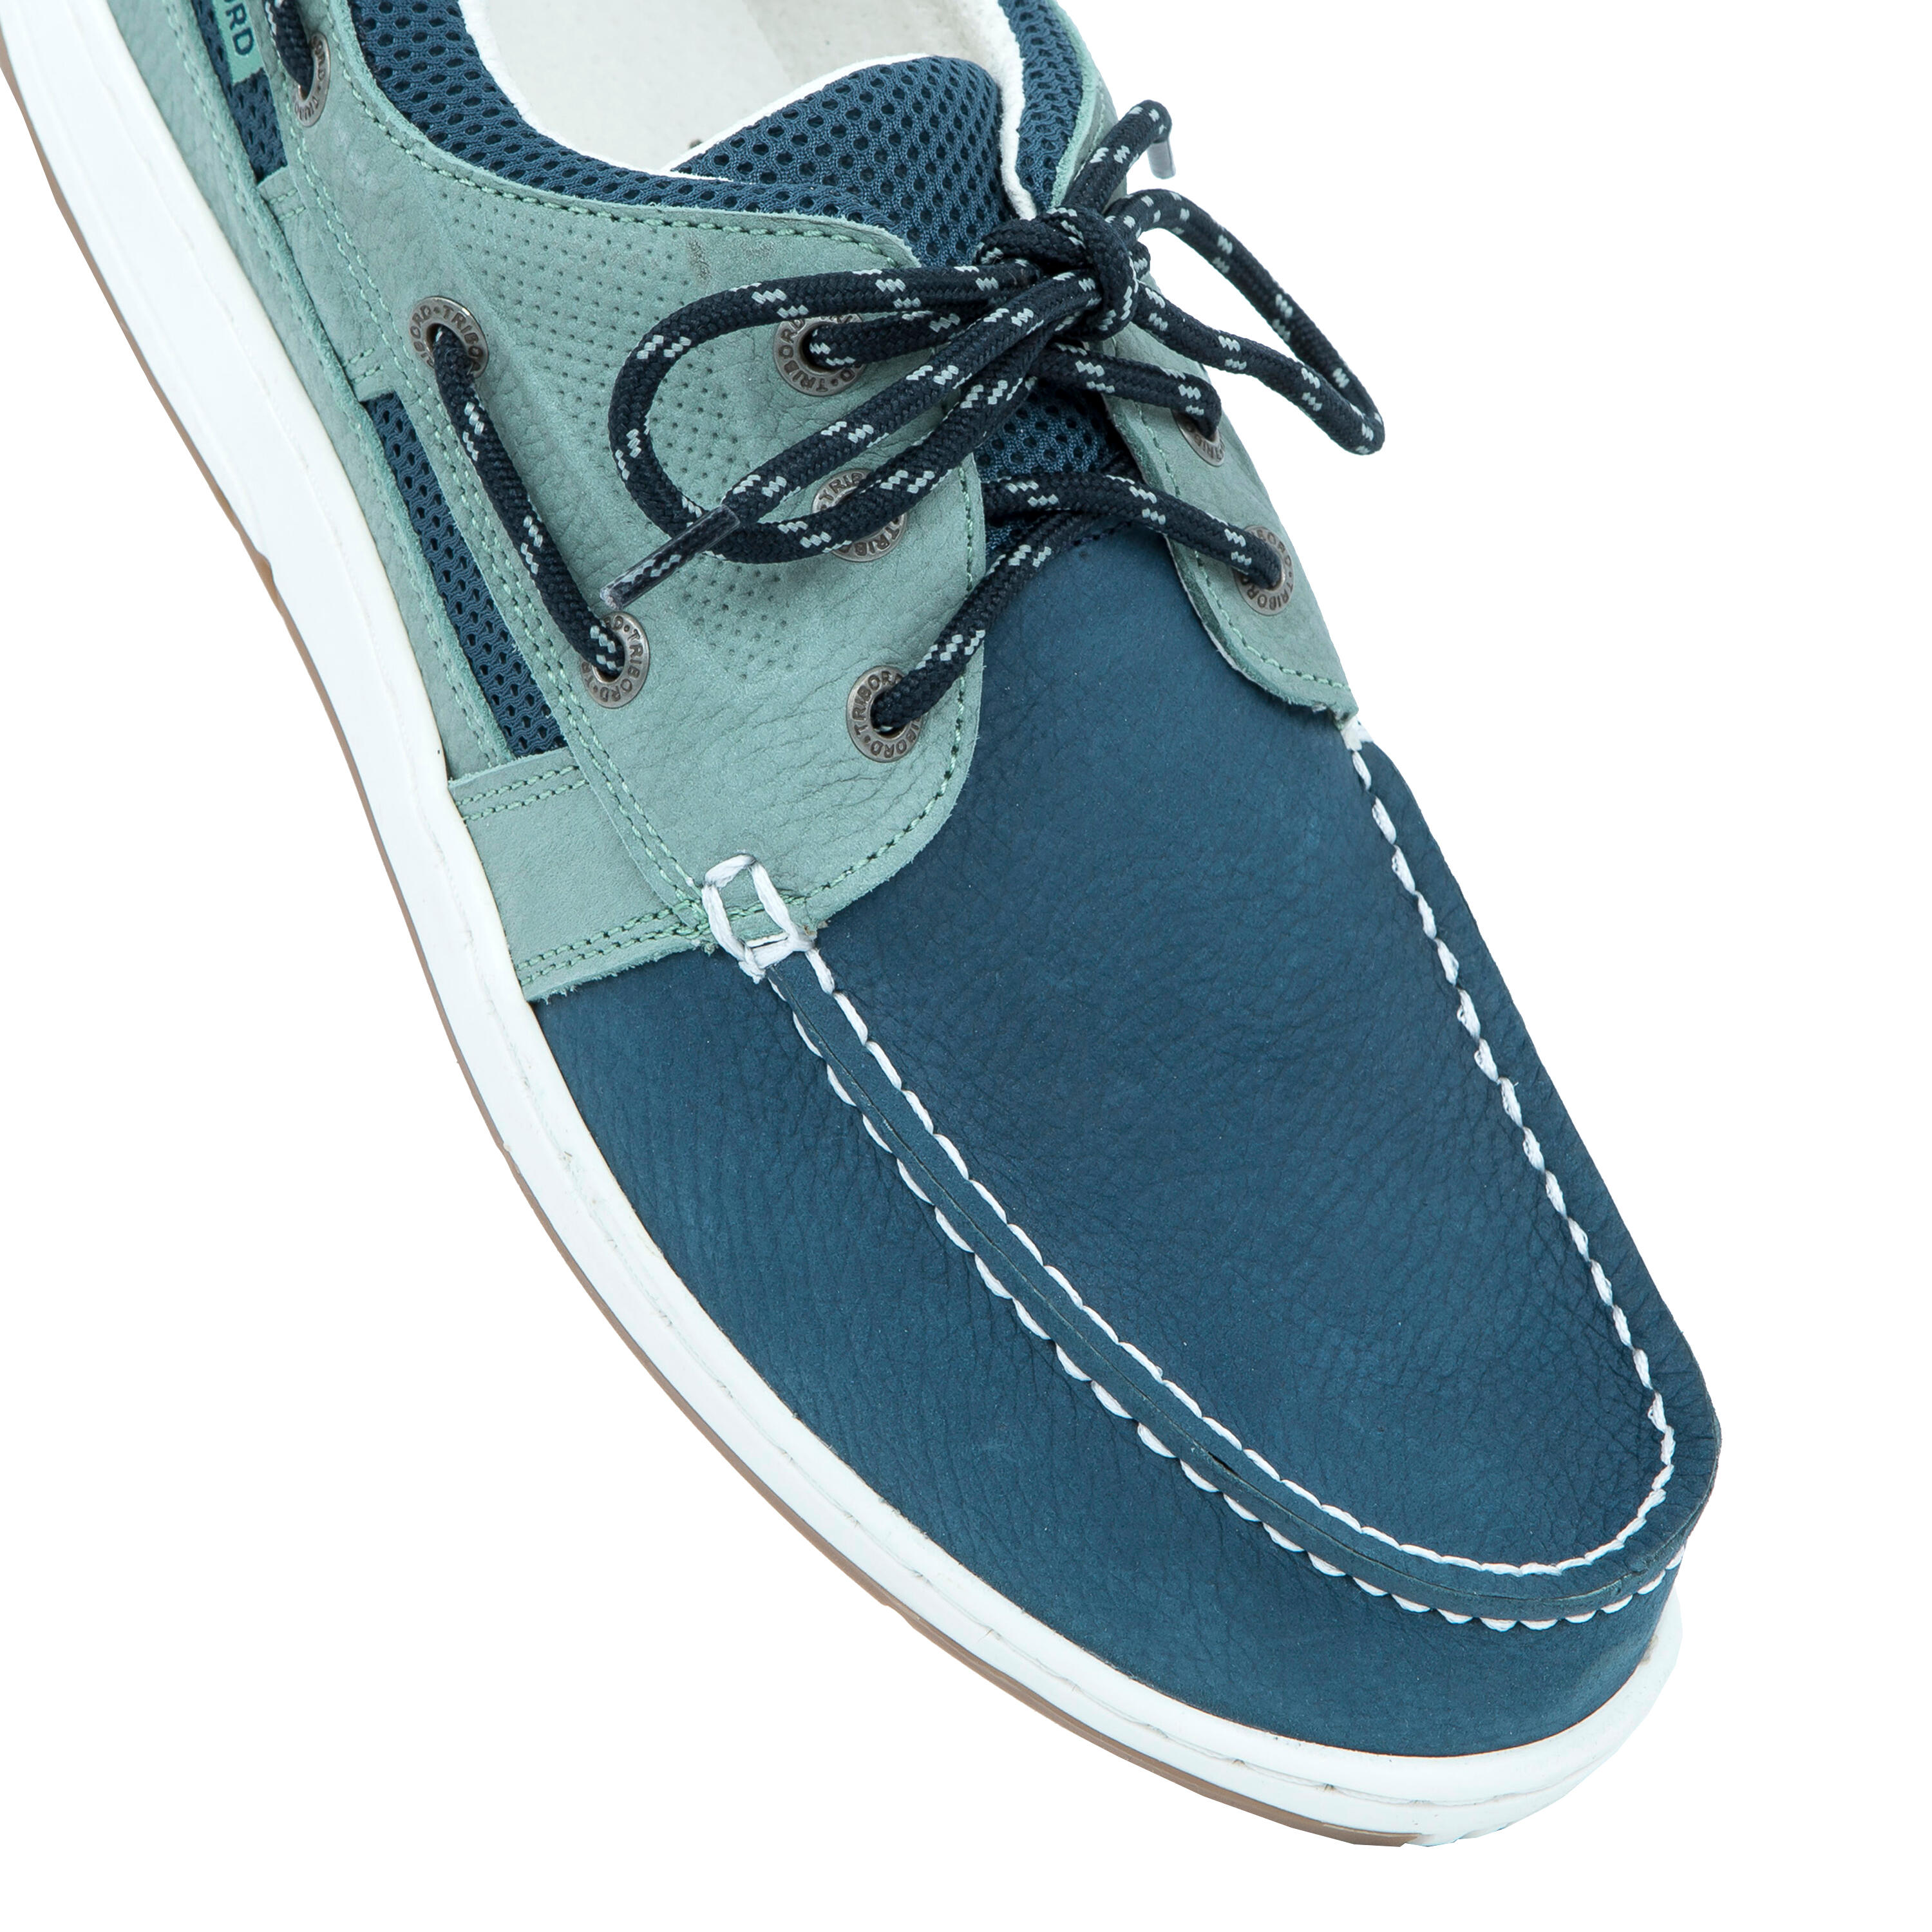 Men’s Leather Boat Shoes CLIPPER - Petrol Blue / Khaki 4/9